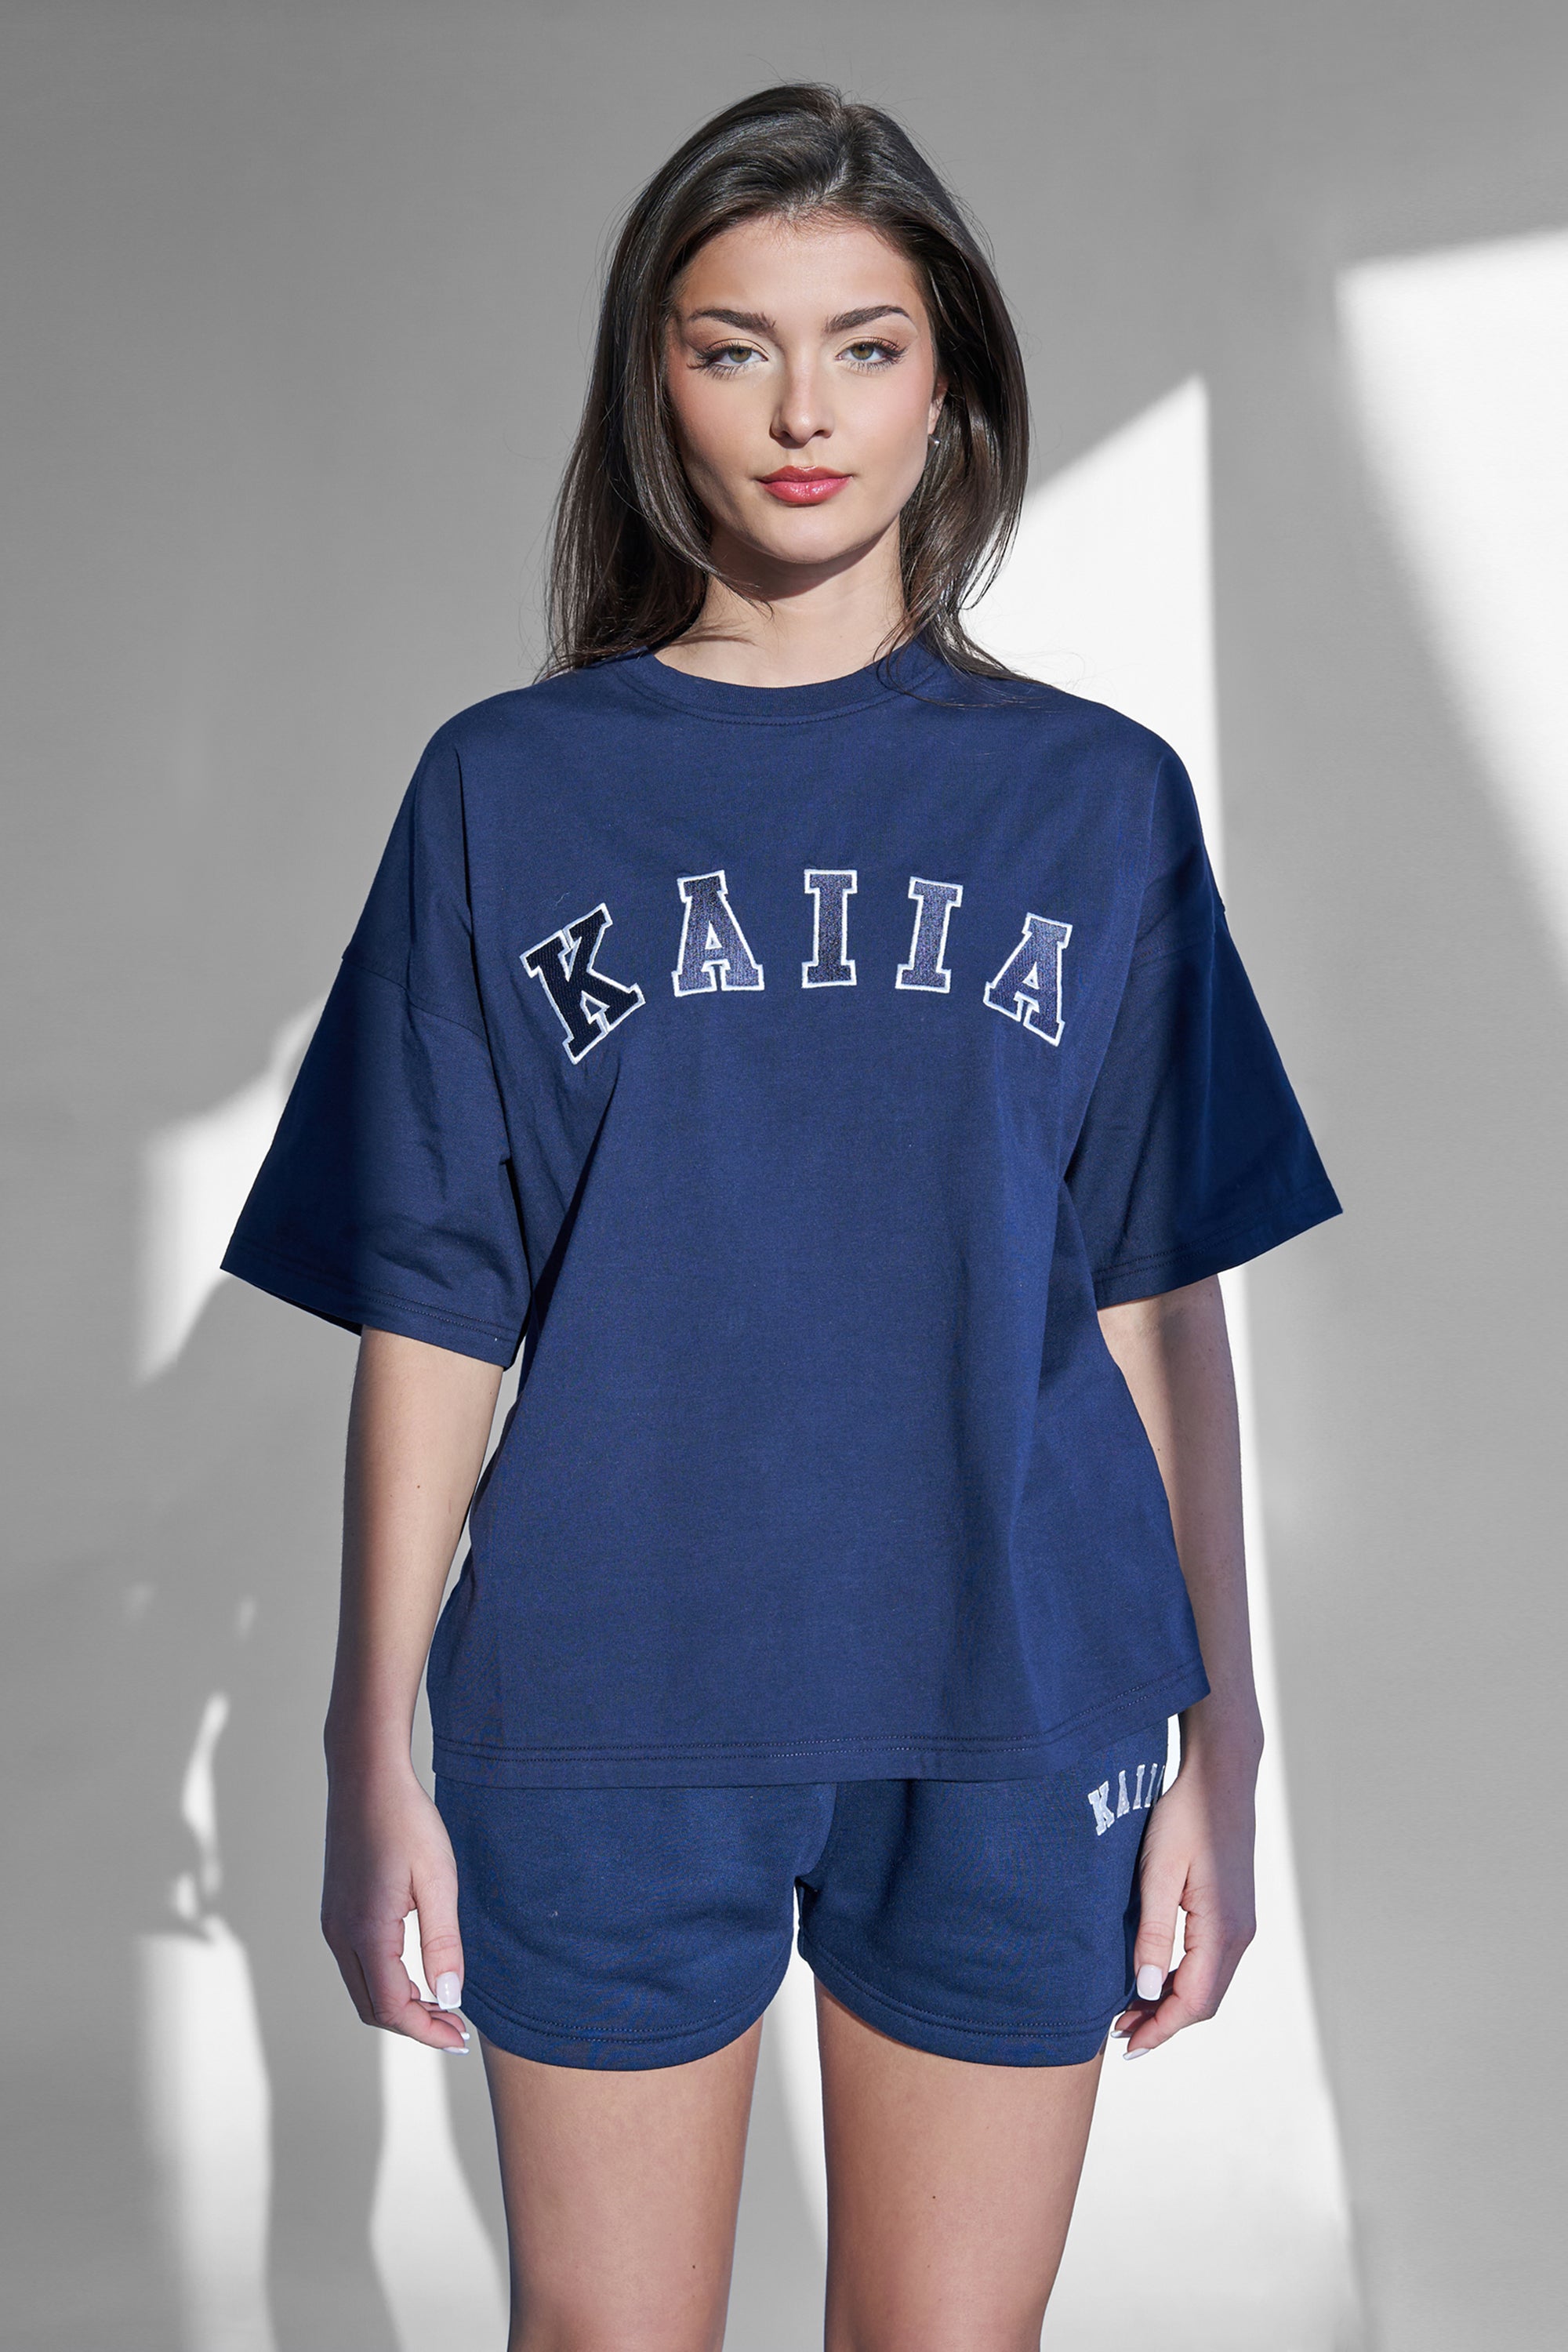 Kaiia Oversized T Shirt Navy